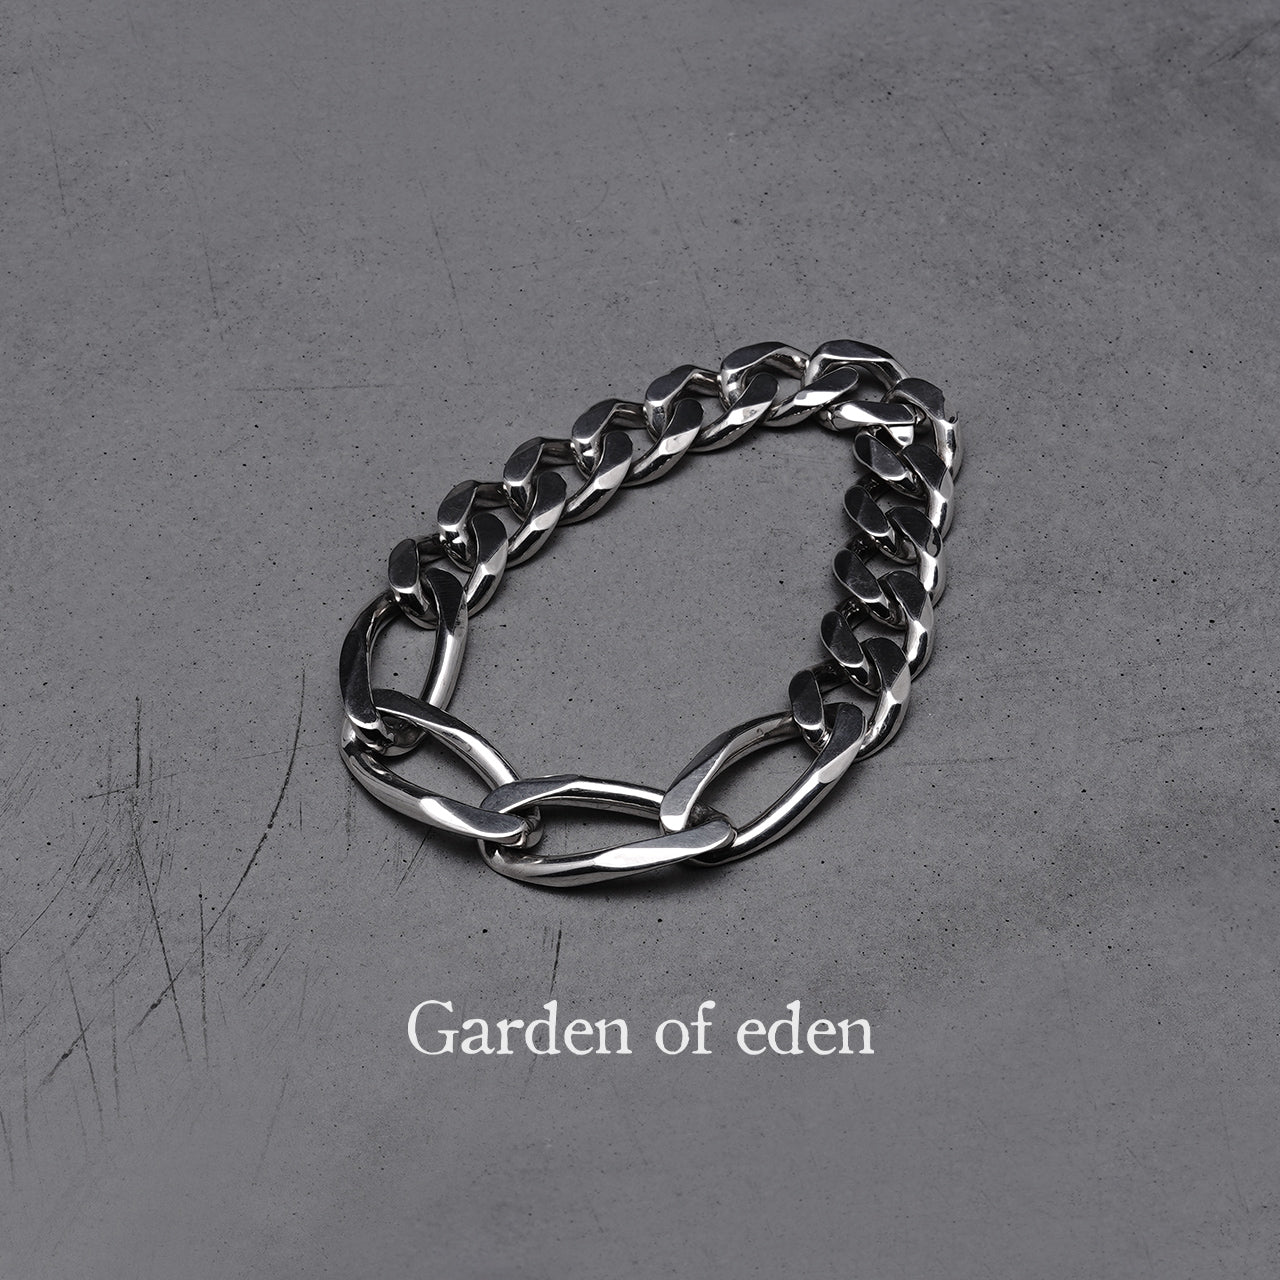 Garden of Eden ガーデンオブエデン シームレス カーブ リンク ブレスレット SEAMLESS CURB LINK BRACE シルバー925 アクセサリー 21AW-SCB06 【送料無料】